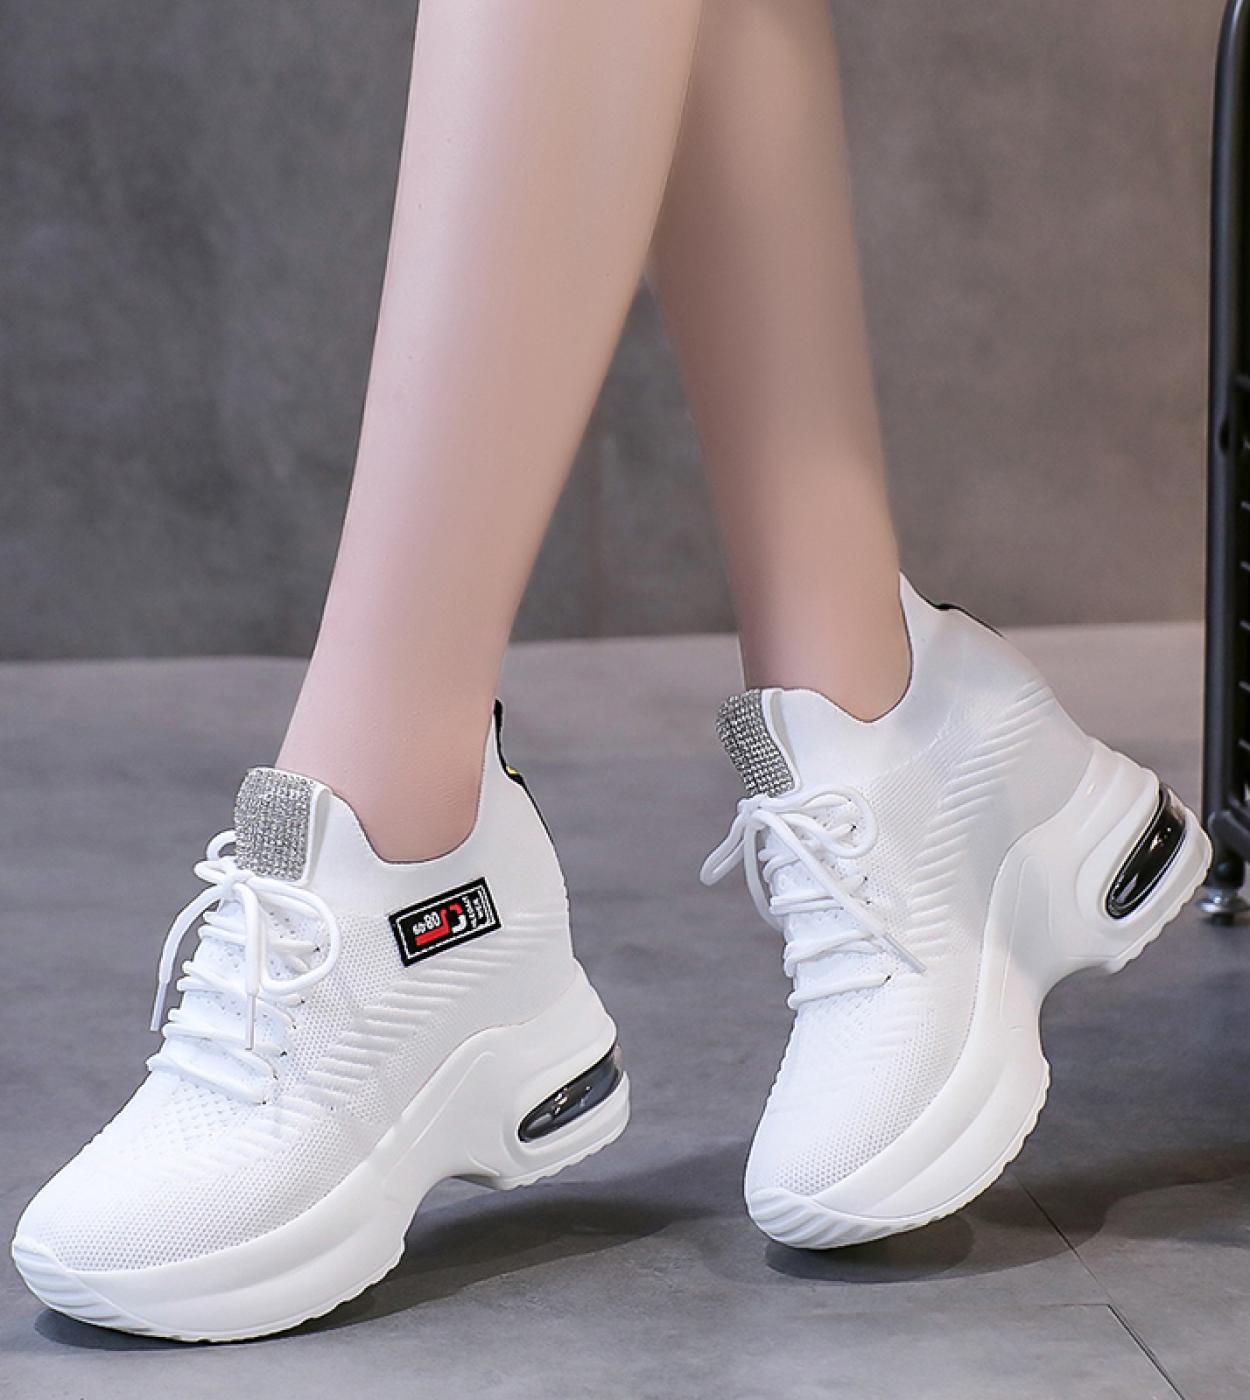 Women's Casual Lace Up Sneakers Platform Hidden High Wedge Heels Shoes |  eBay